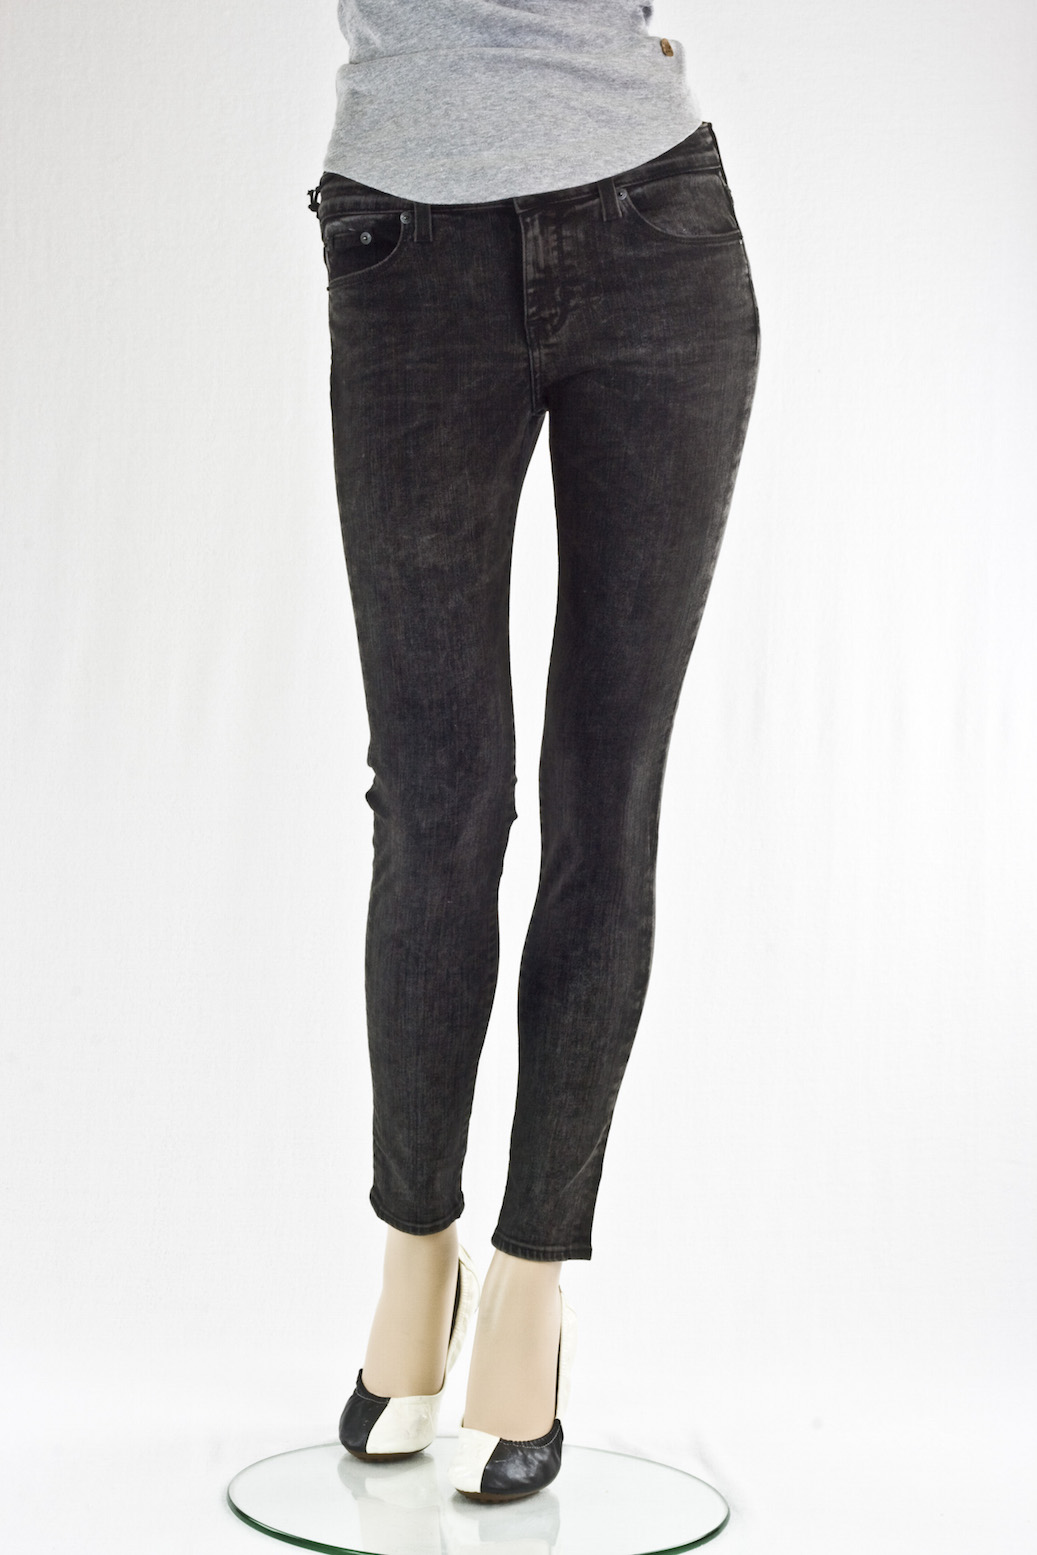 Женские джинсы Big Star "Скини" Alex silverlake jeans интернет-магазин Fashion Jeans